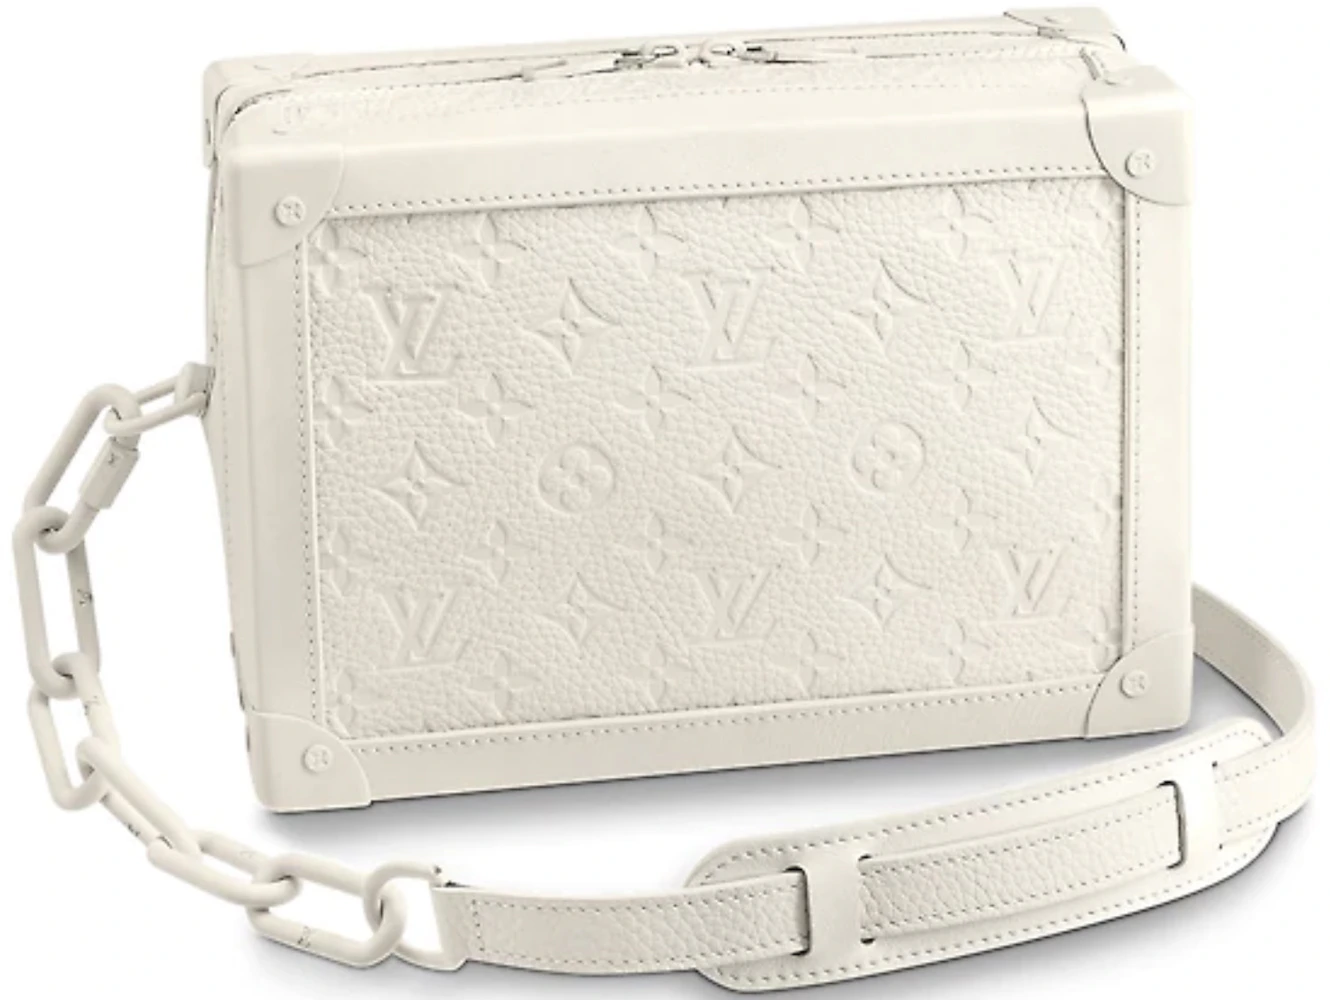 Louis Vuitton x Virgil Abloh White Soft Trunk Bag of Taurillion